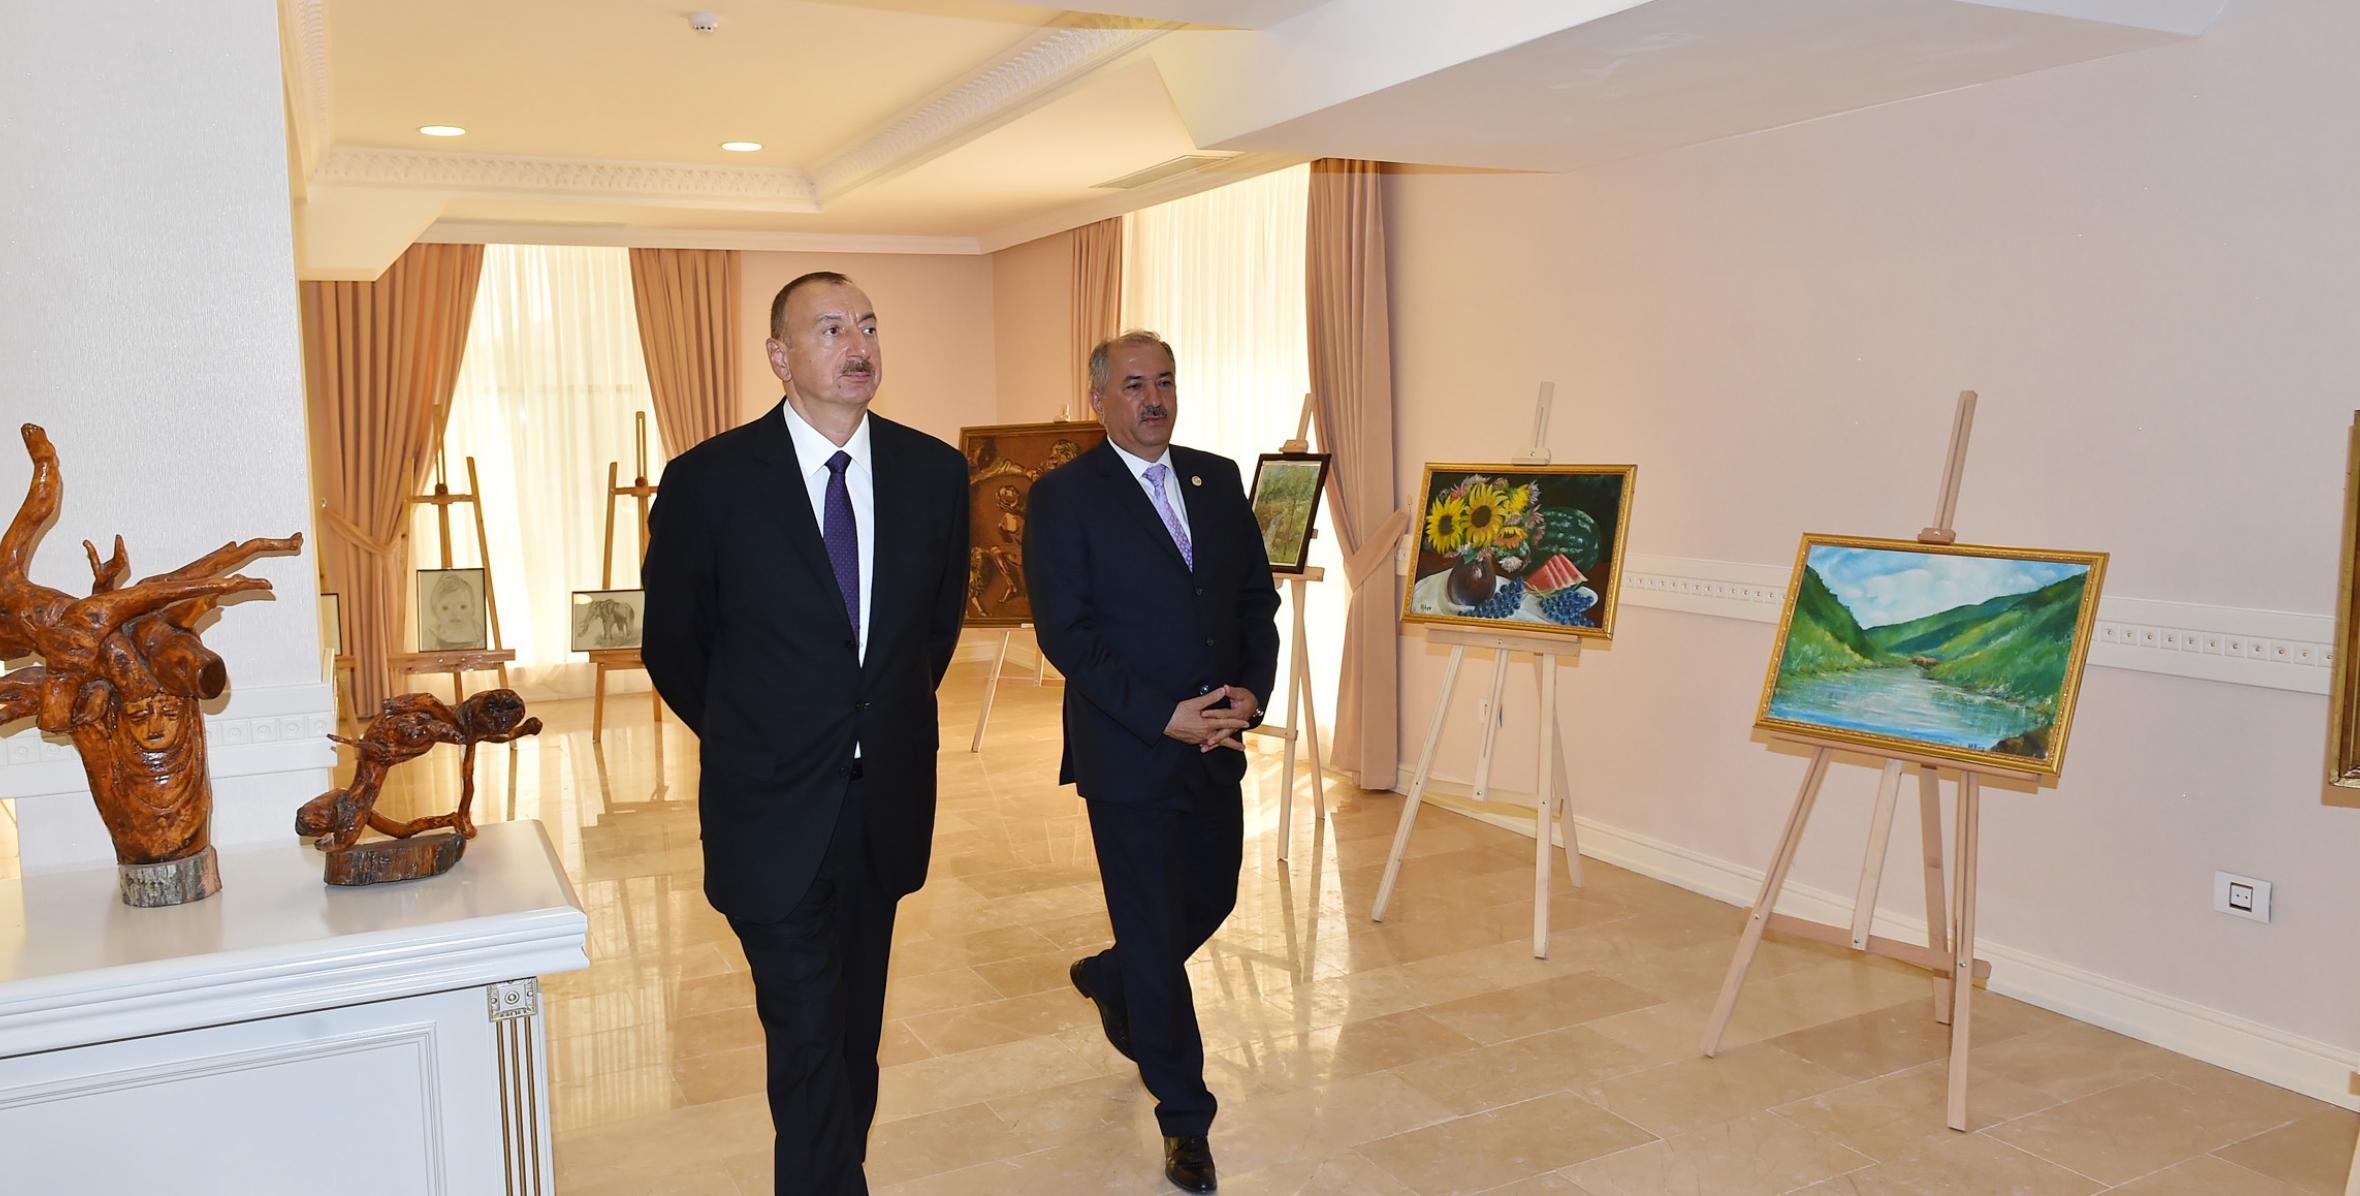 Ilham Aliyev attended the opening of the Heydar Aliyev Center in Jalilabad